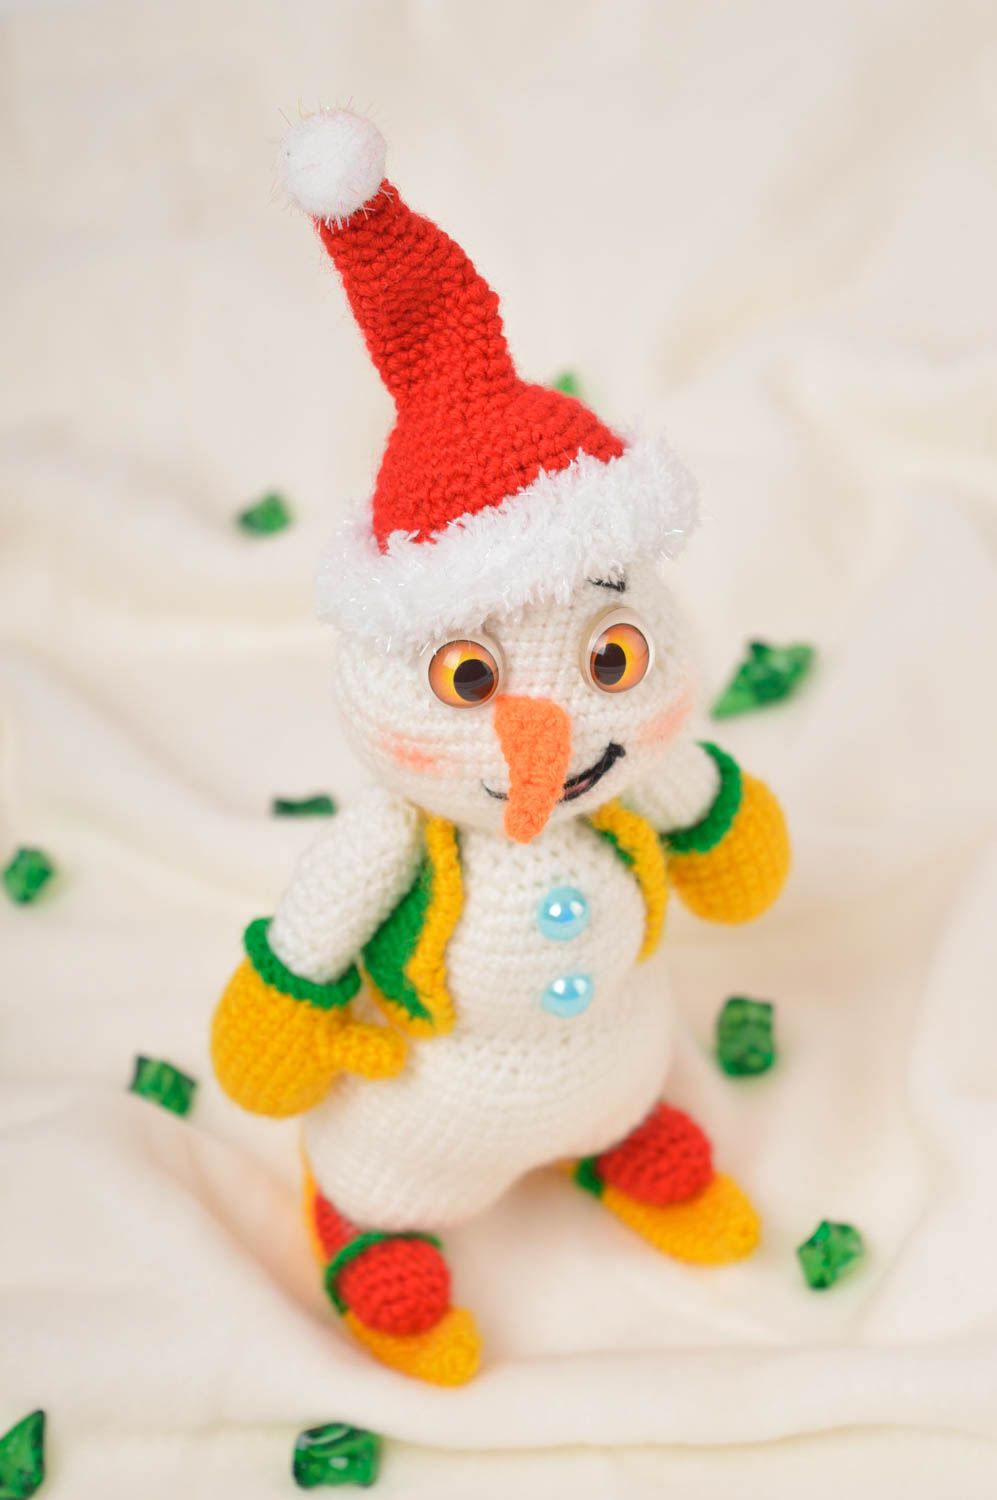 Muñeco de ganchillo hecho a mano juguete tejido a crochet regalo original foto 1